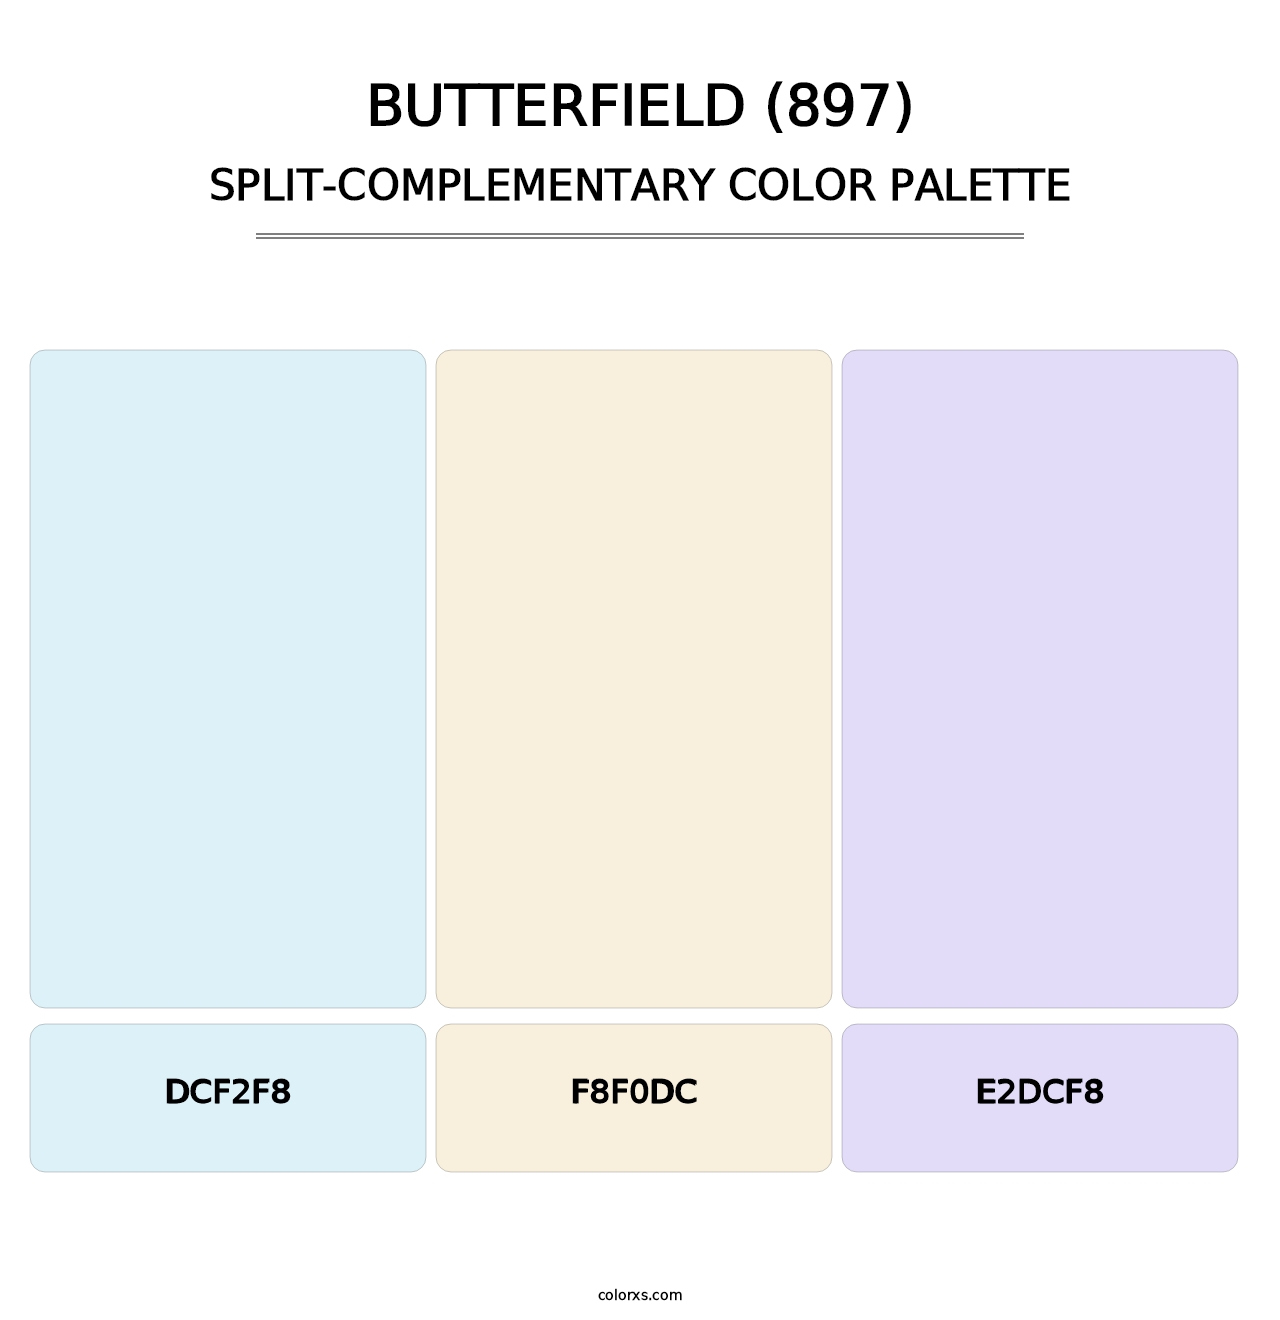 Butterfield (897) - Split-Complementary Color Palette